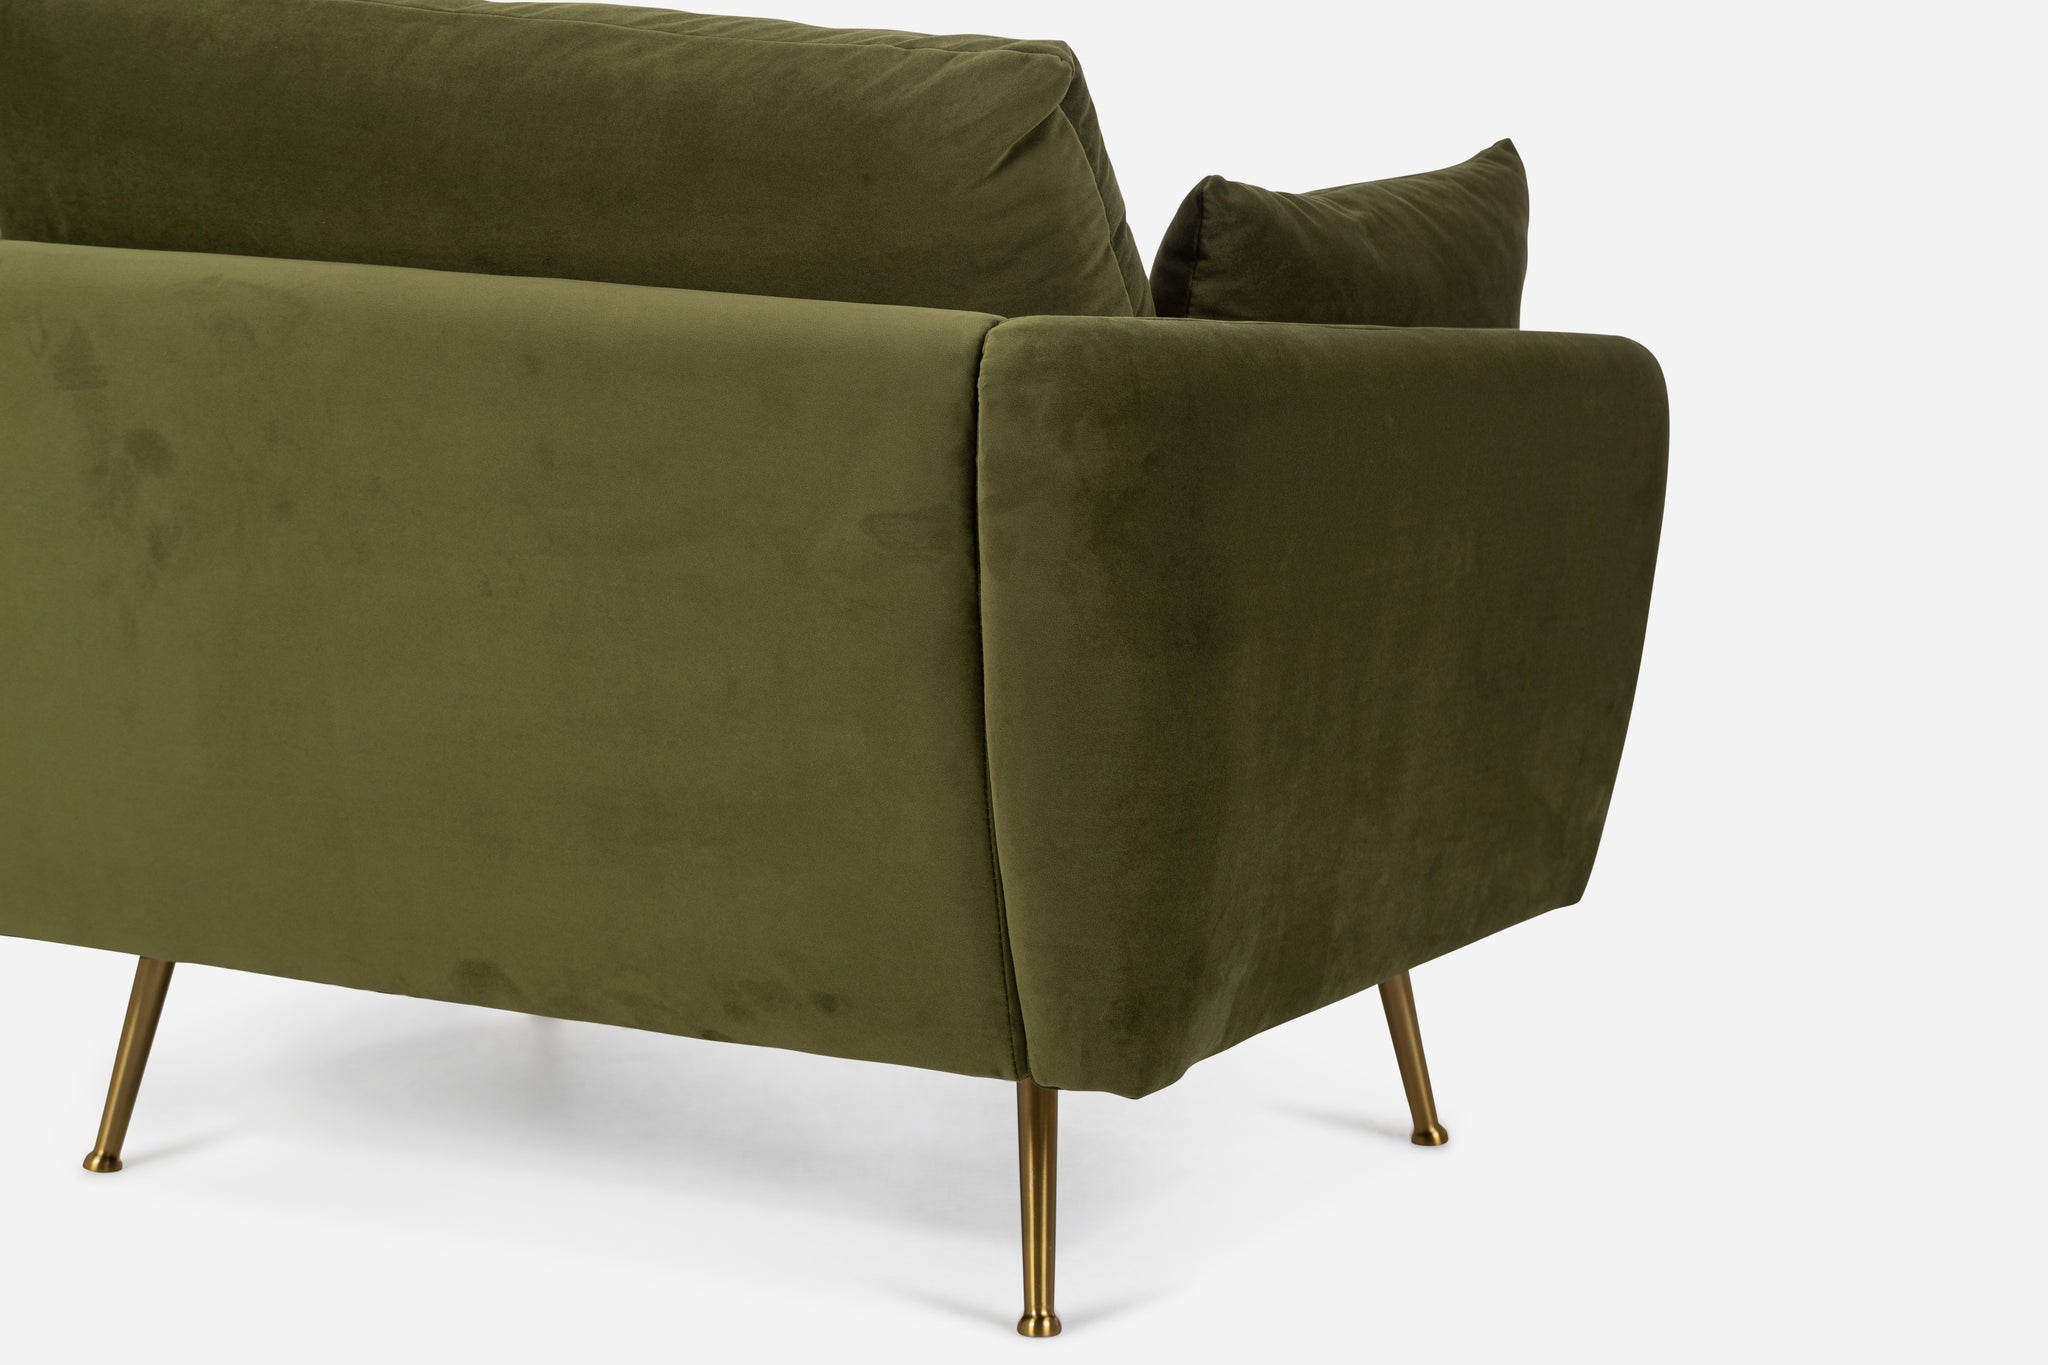 park armchair shown in olive velvet with gold legs